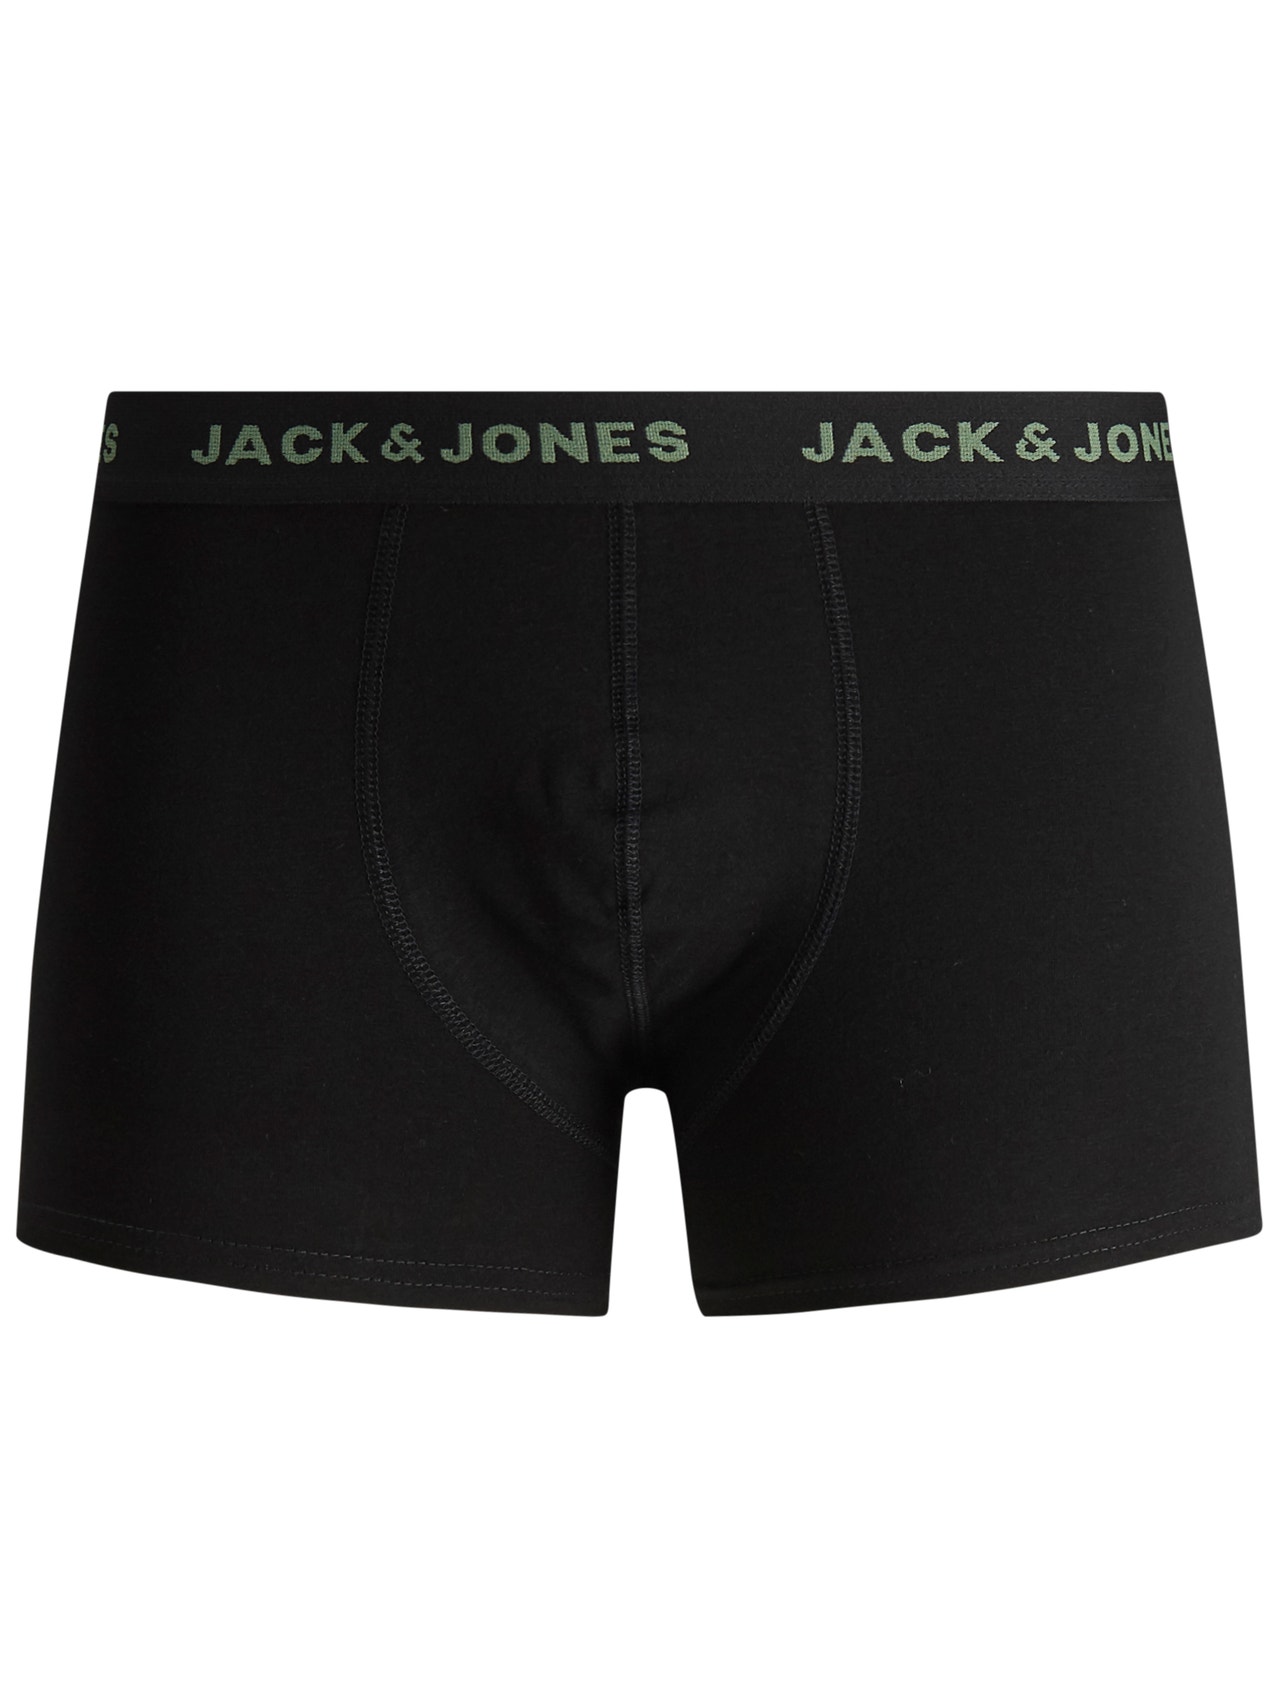 Jack & Jones 7 Trunks -Black - 12165587